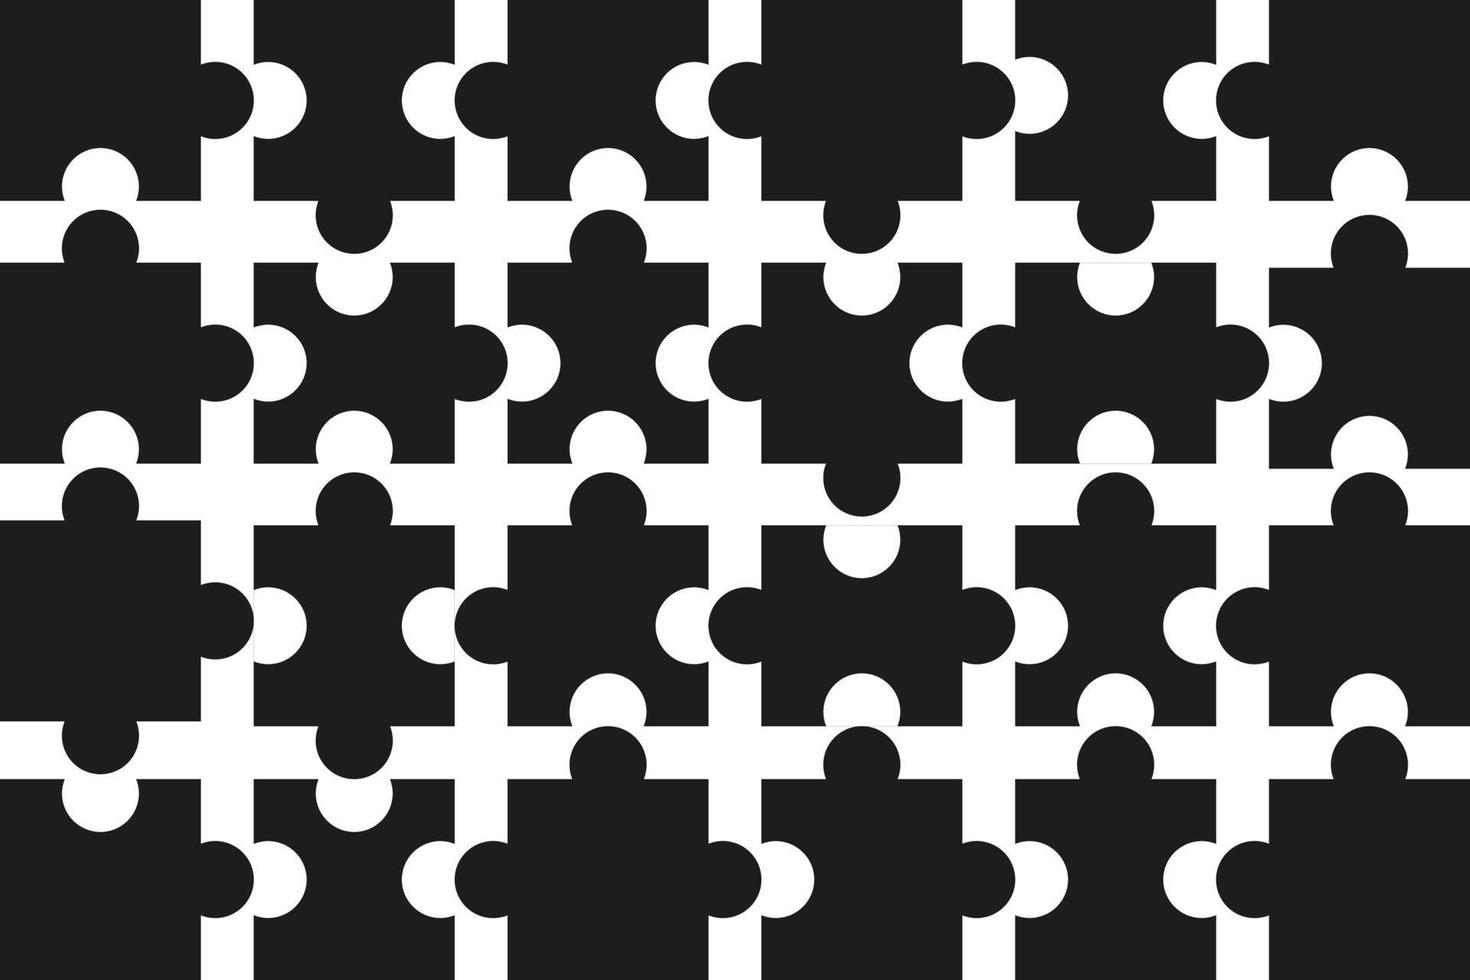 Puzzle background, black color. Vector illustration in flat design